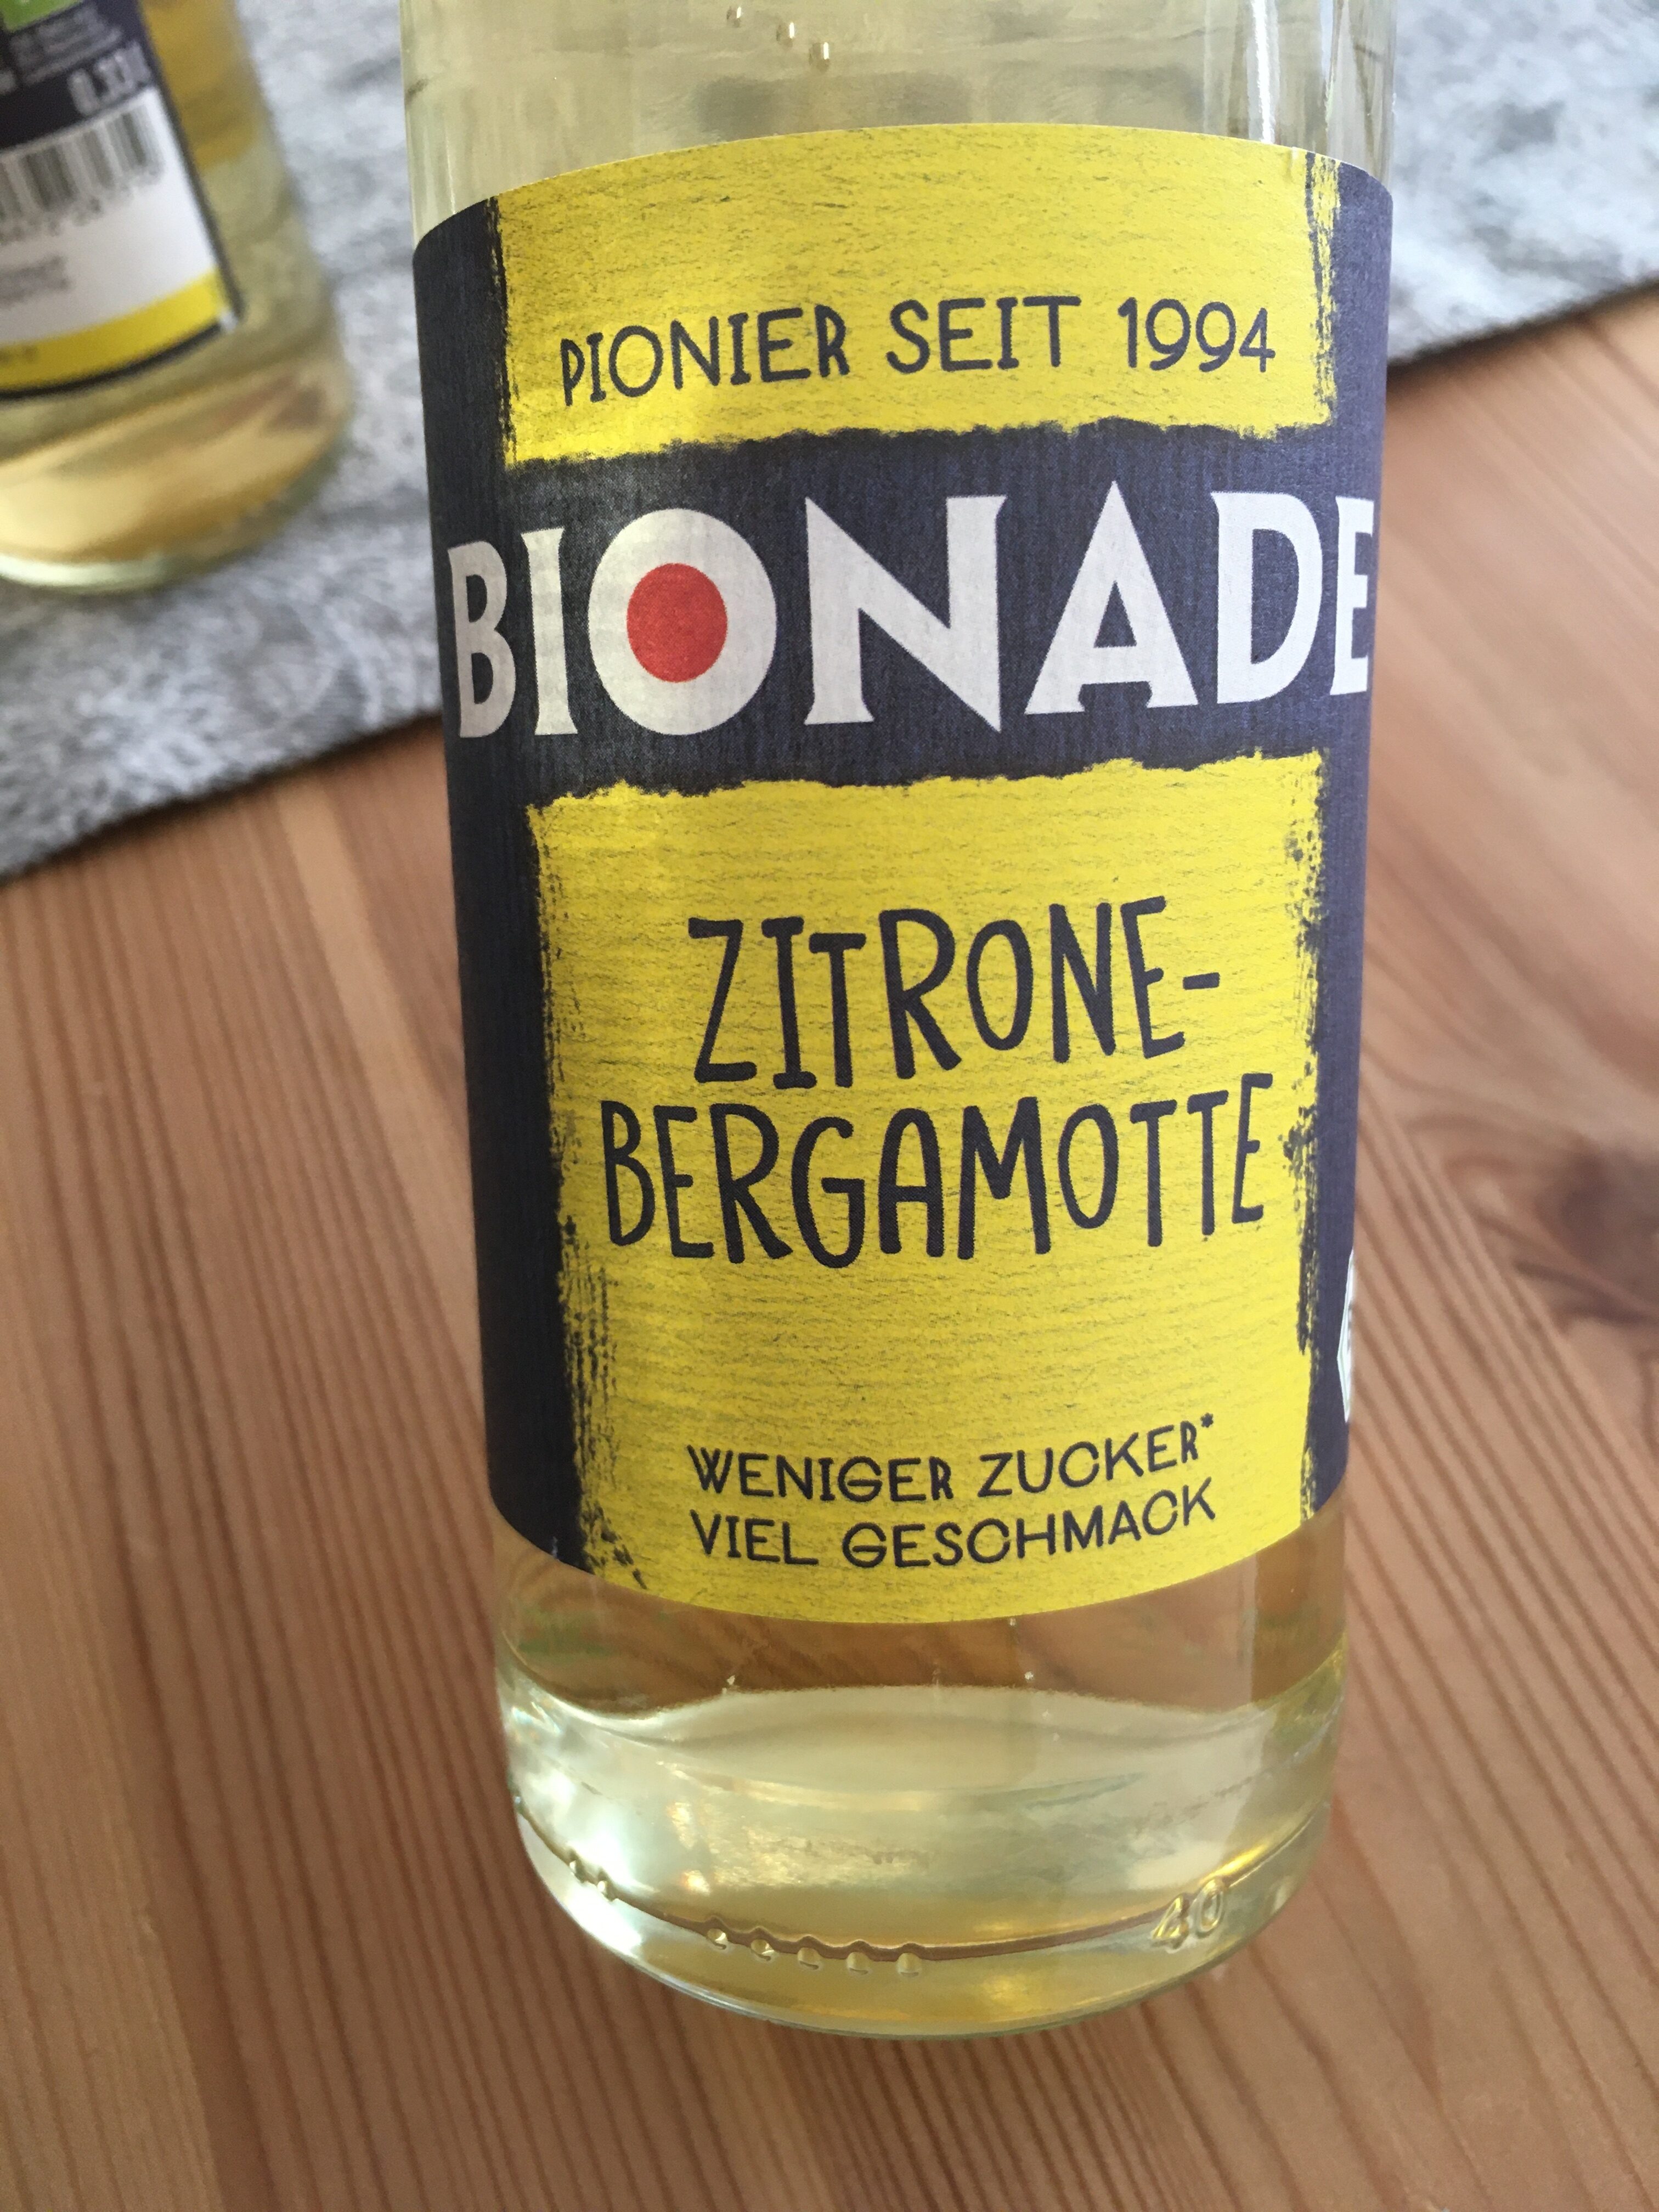 BIONADE Zitrone-Bergamotte - Produit - de